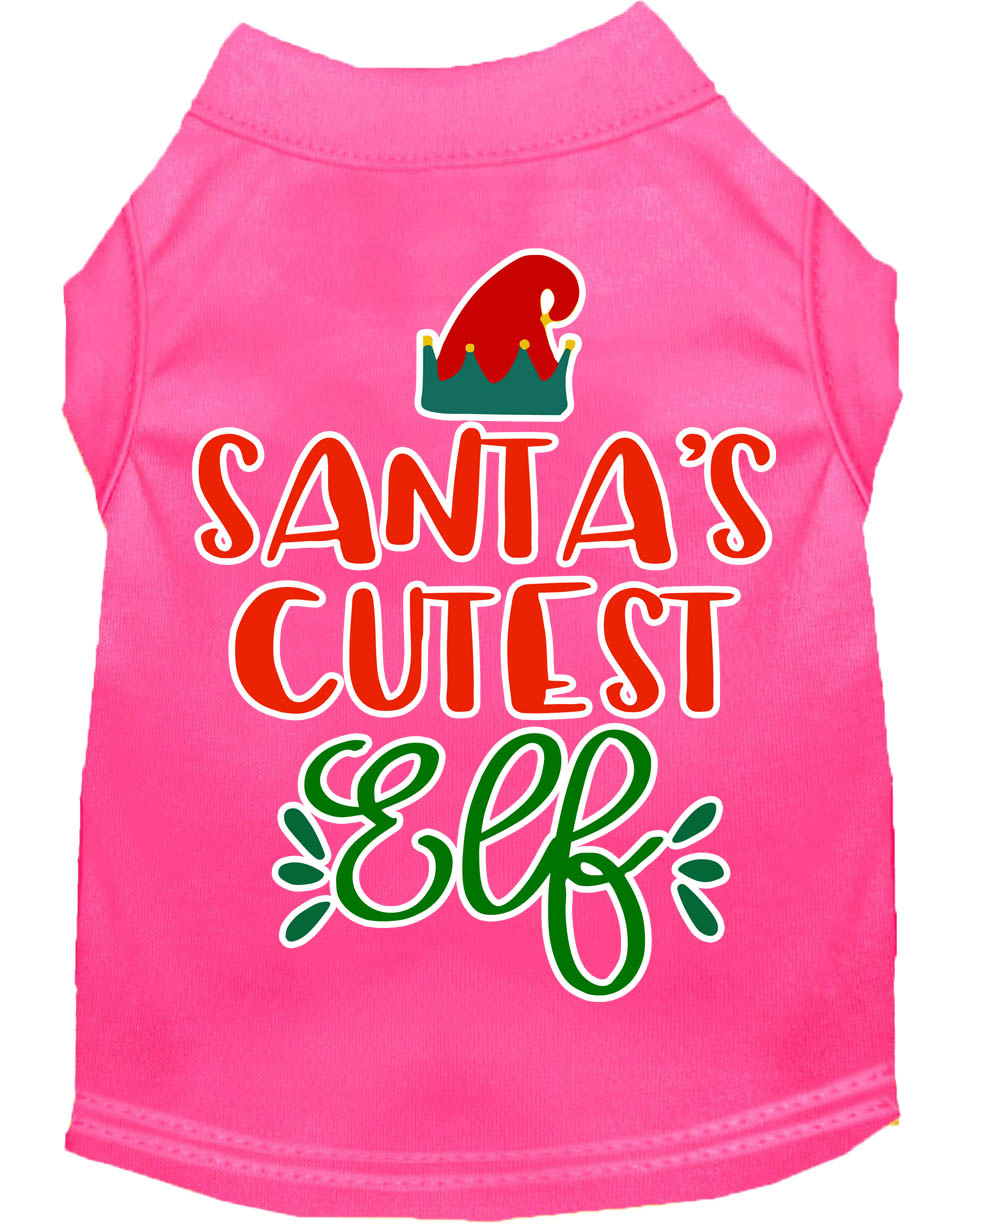 Santa's Cutest Elf Screen Print Dog Shirt Bright Pink Lg